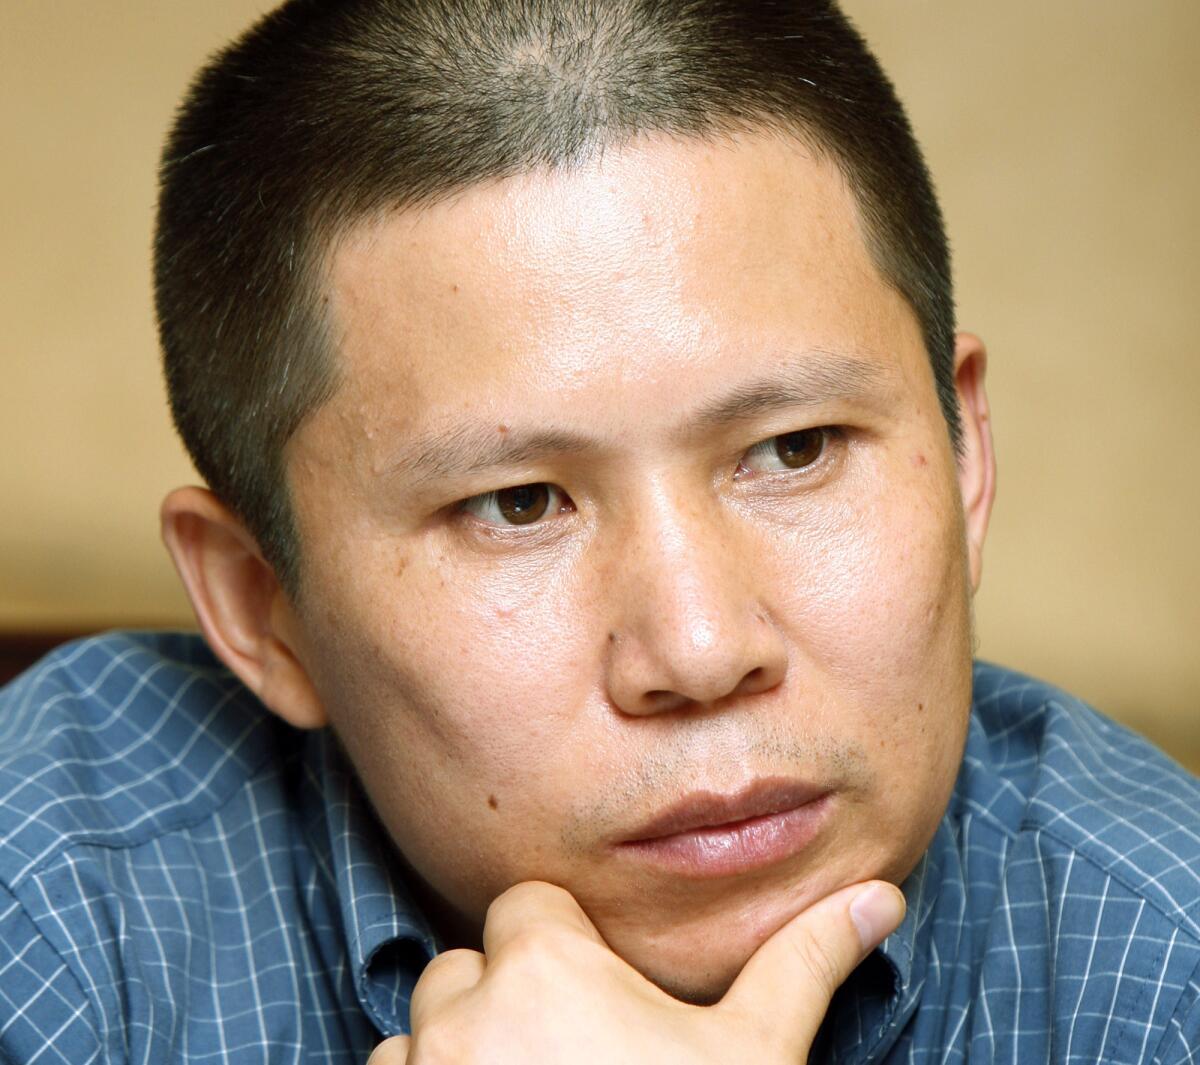 Legal scholar Xu Zhiyong attends a meeting in Beijing on July 17, 2009.